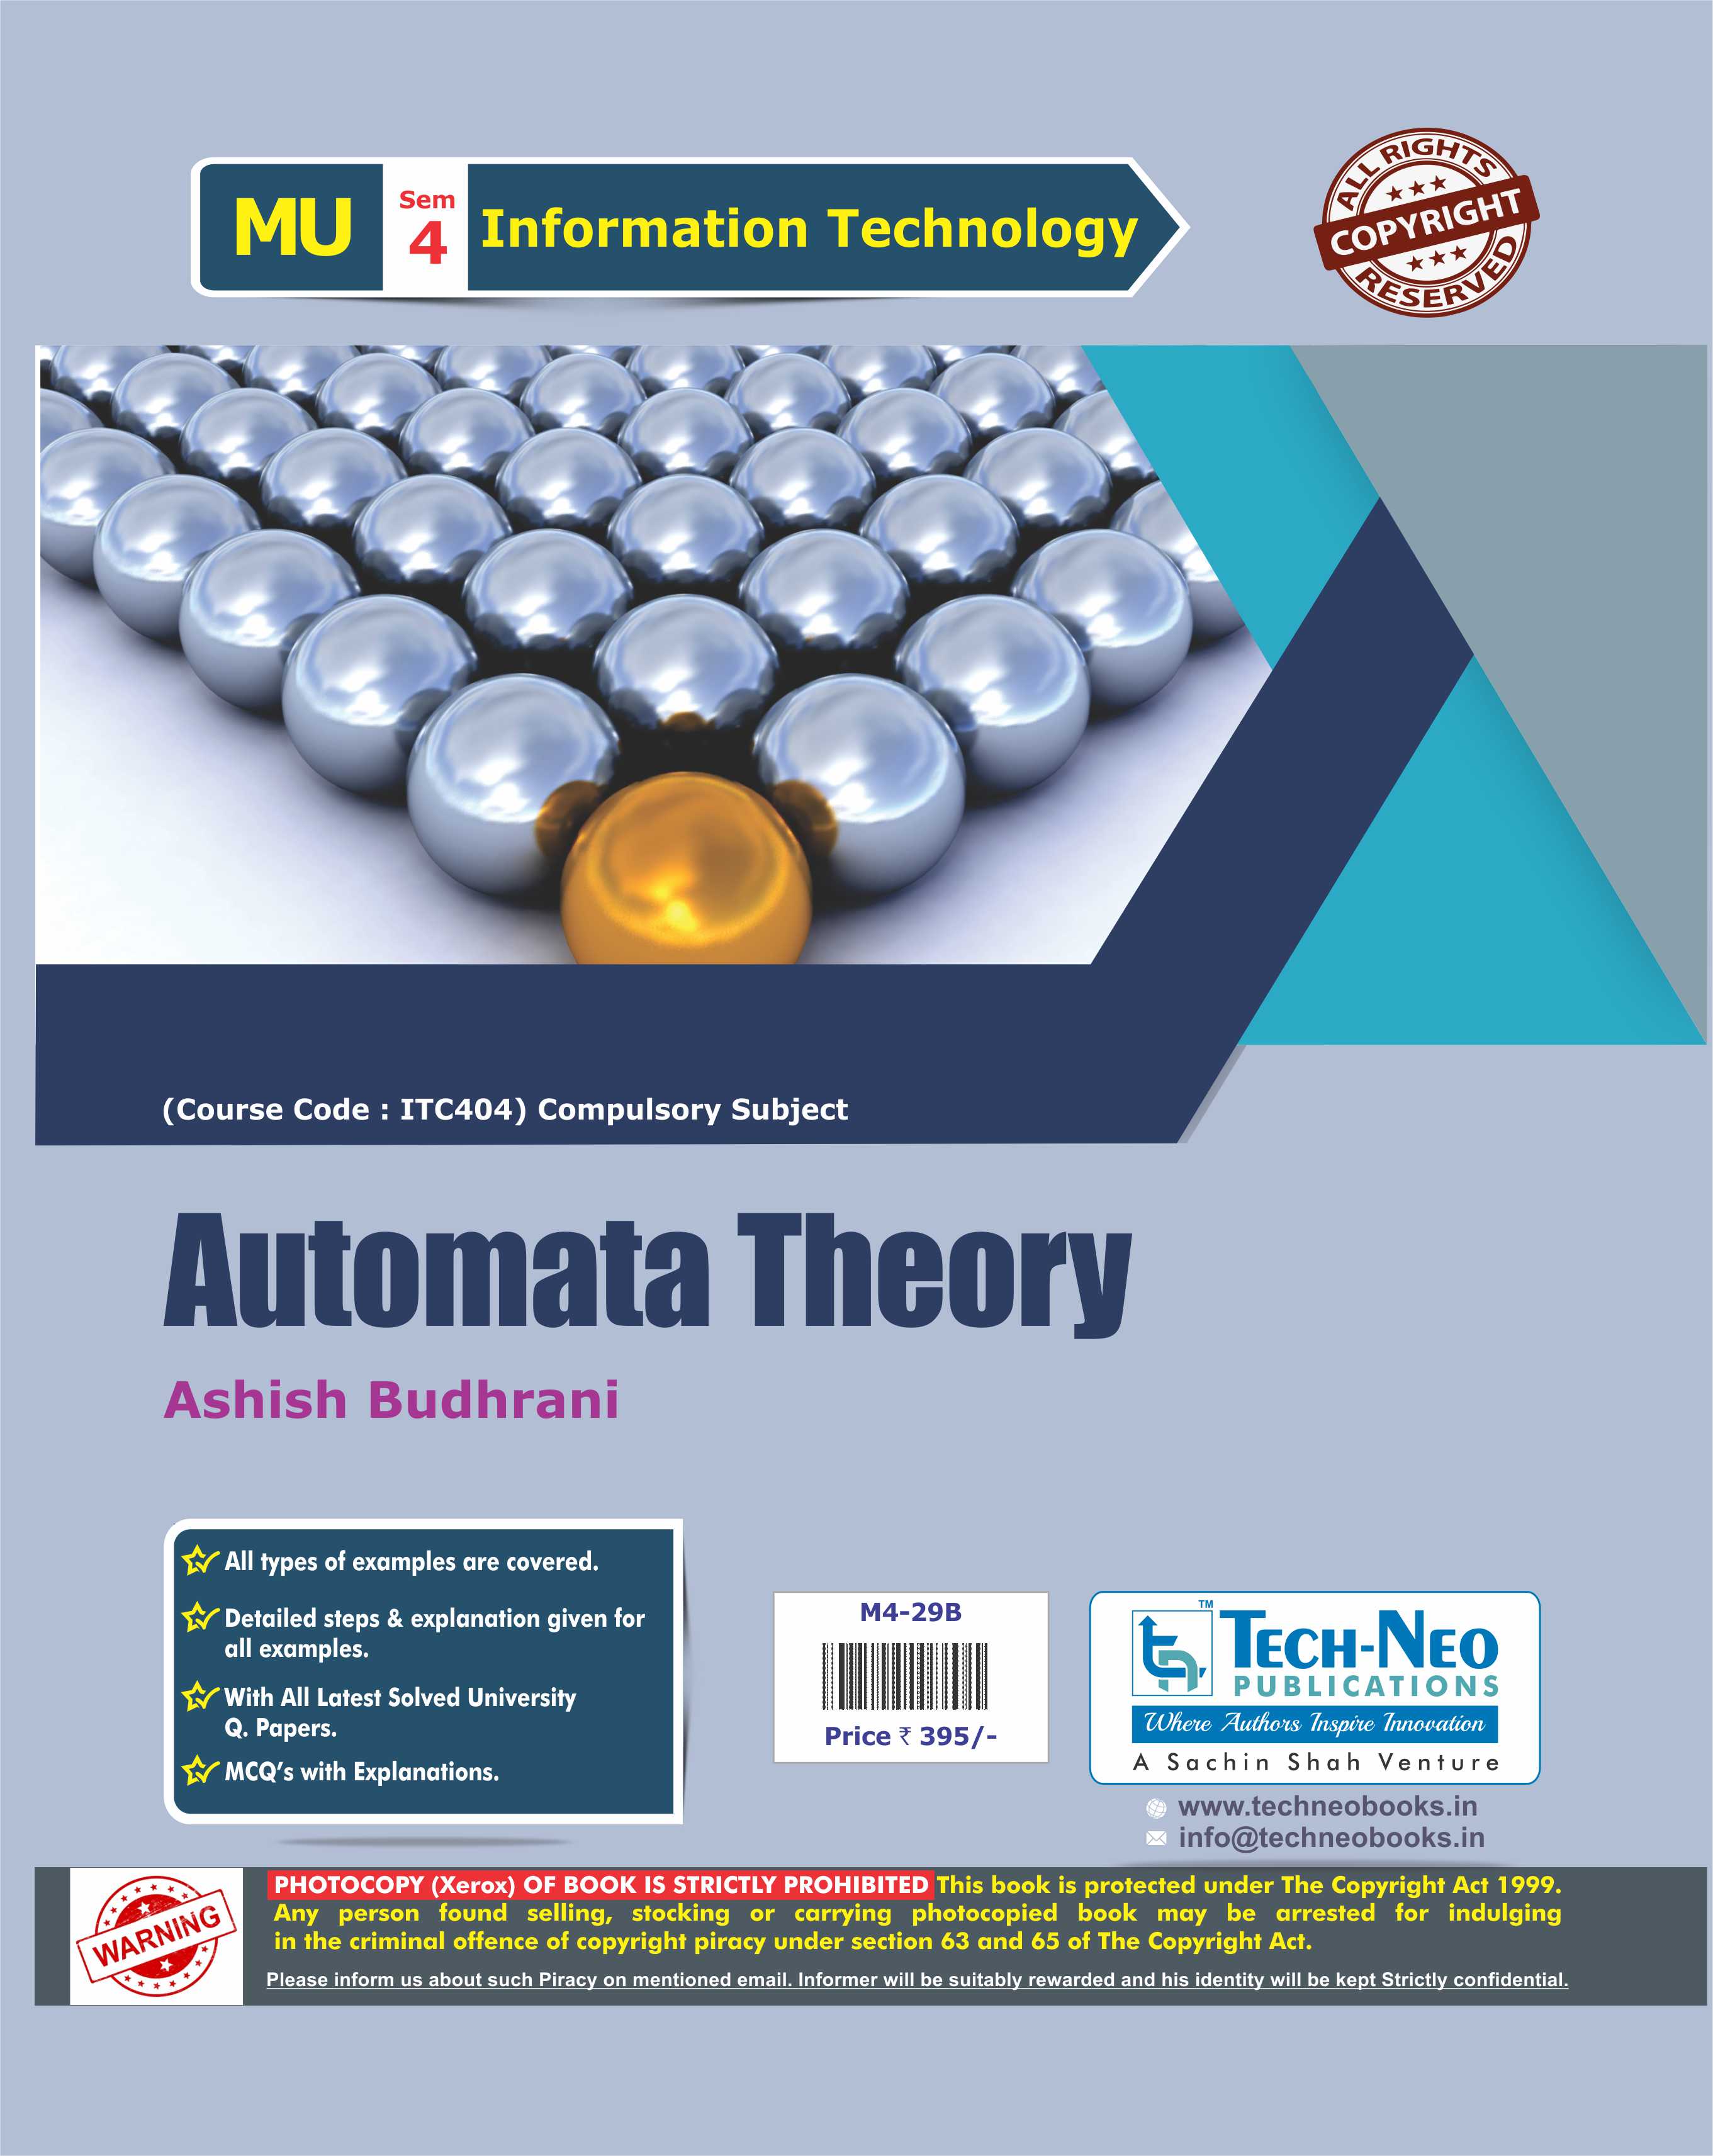 Automata Theory (ITC404)